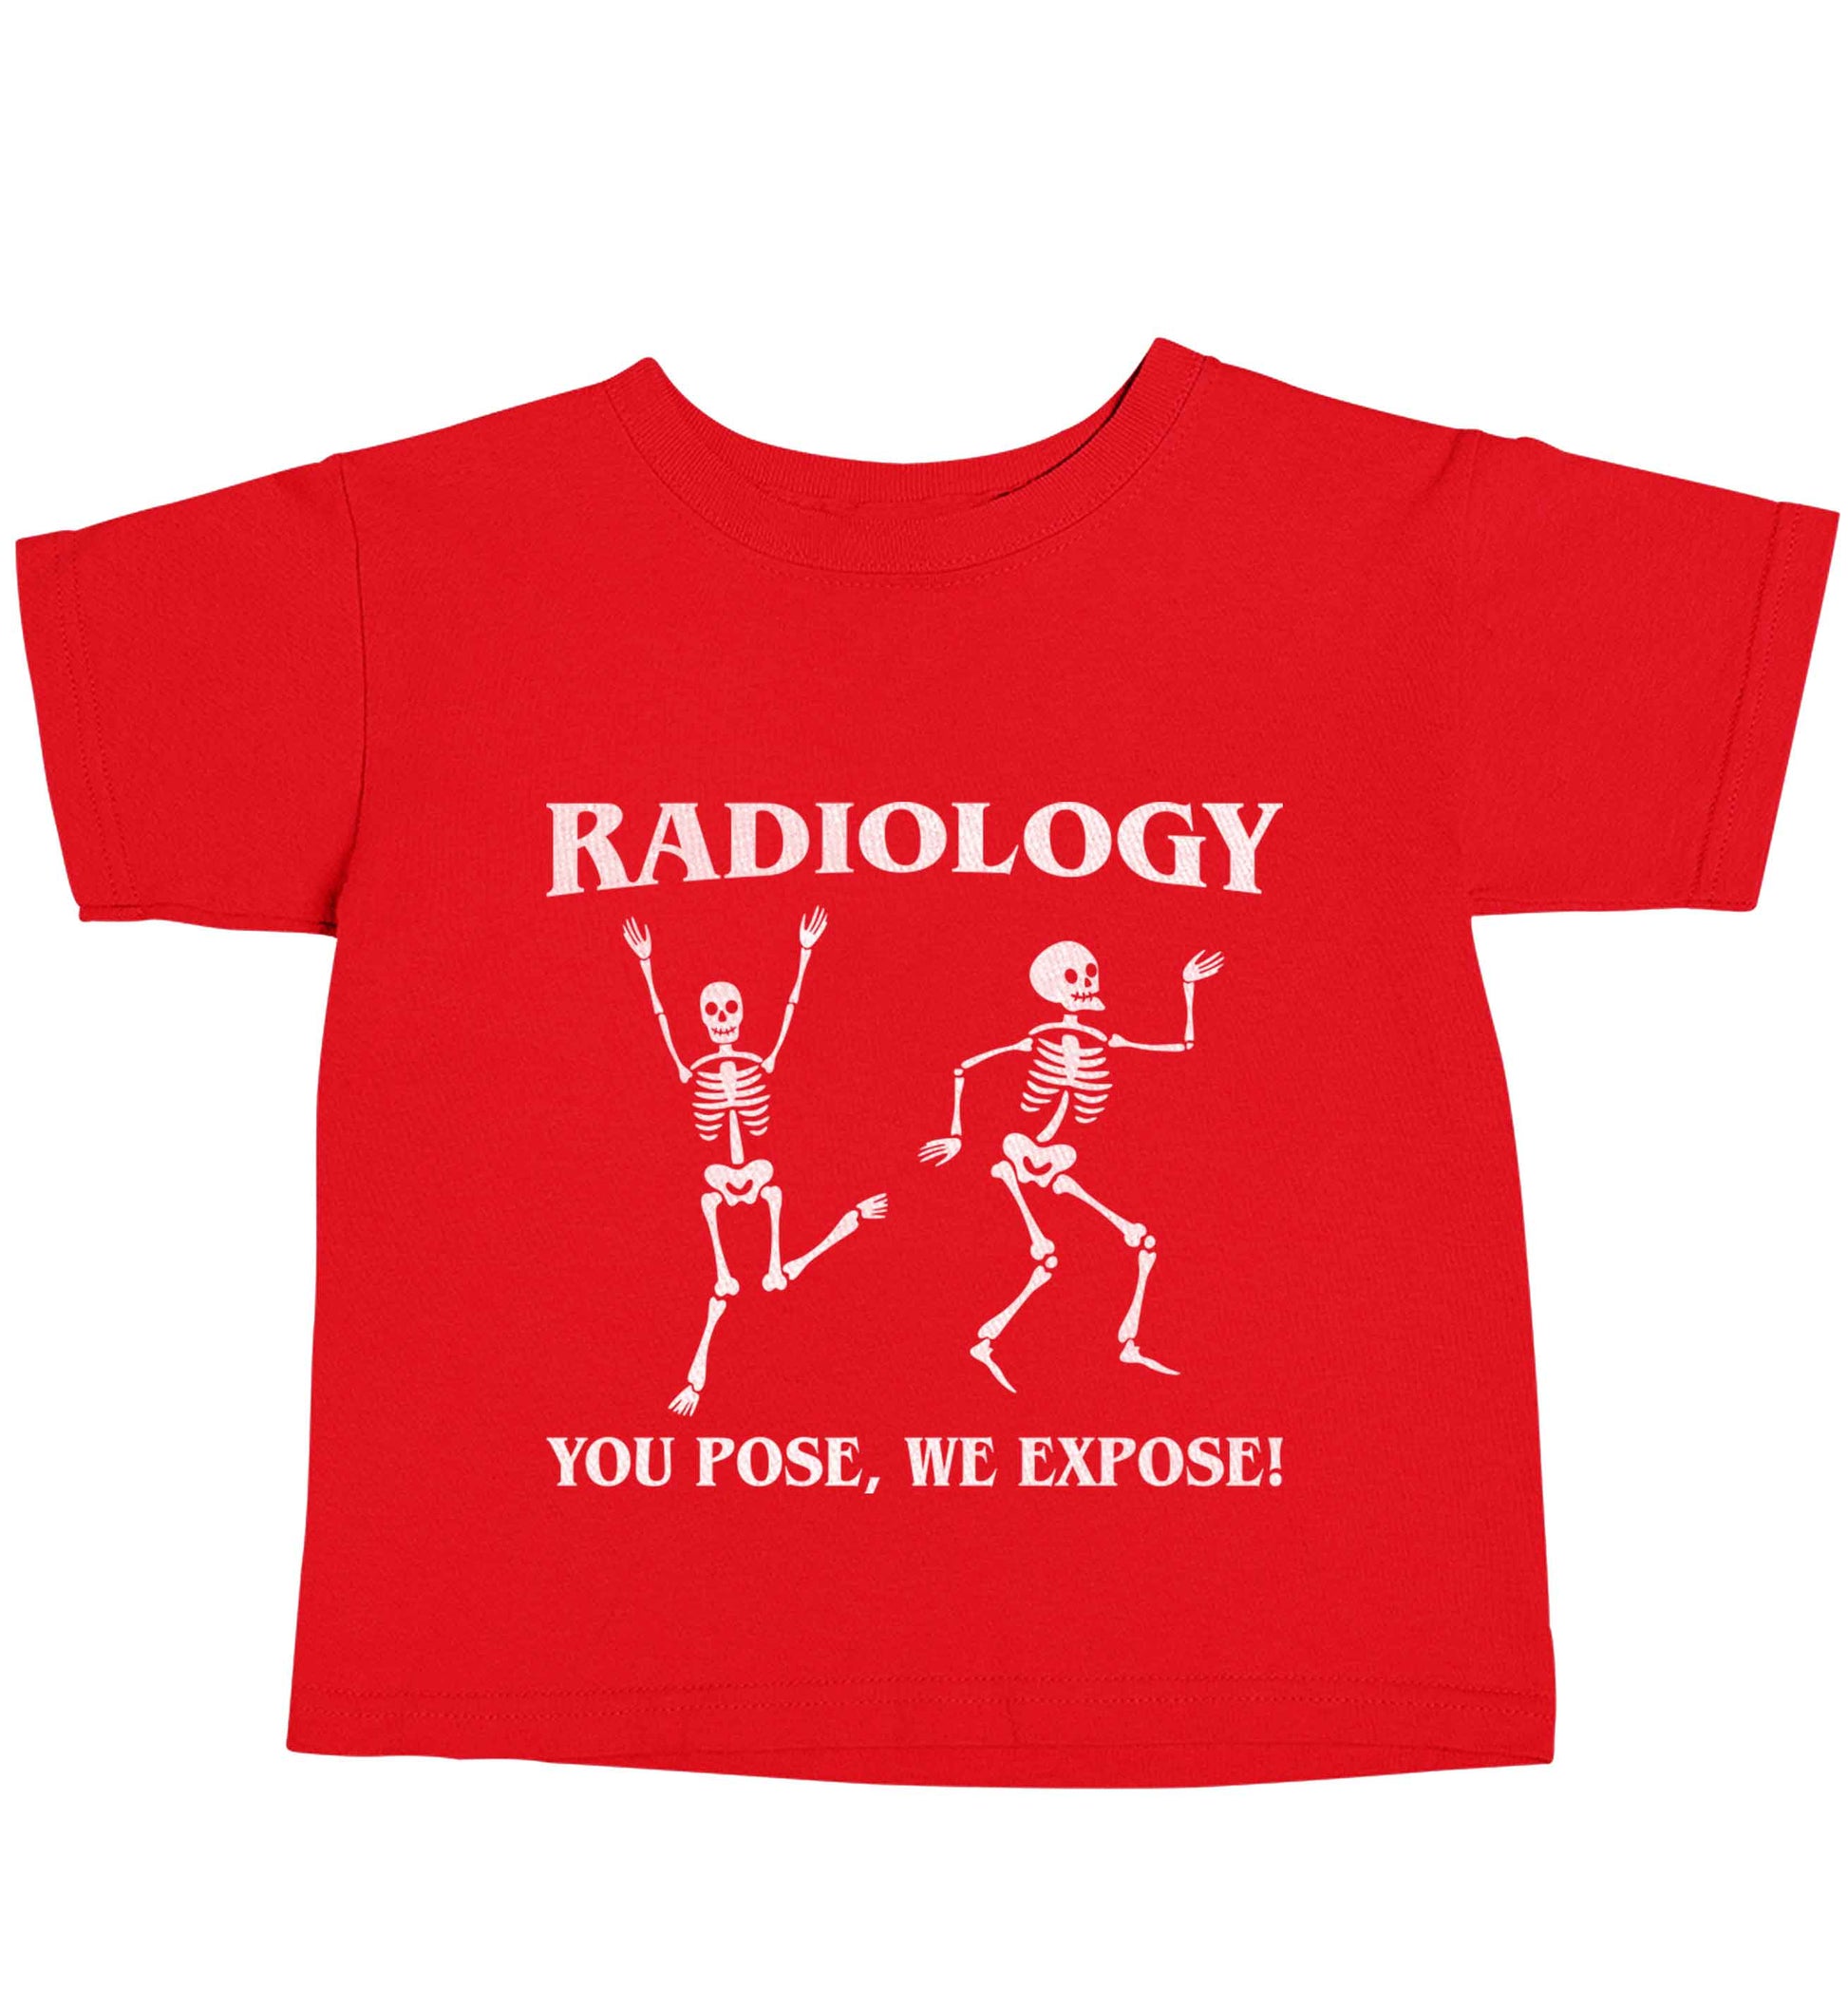 Radiology you pose we expose red baby toddler Tshirt 2 Years